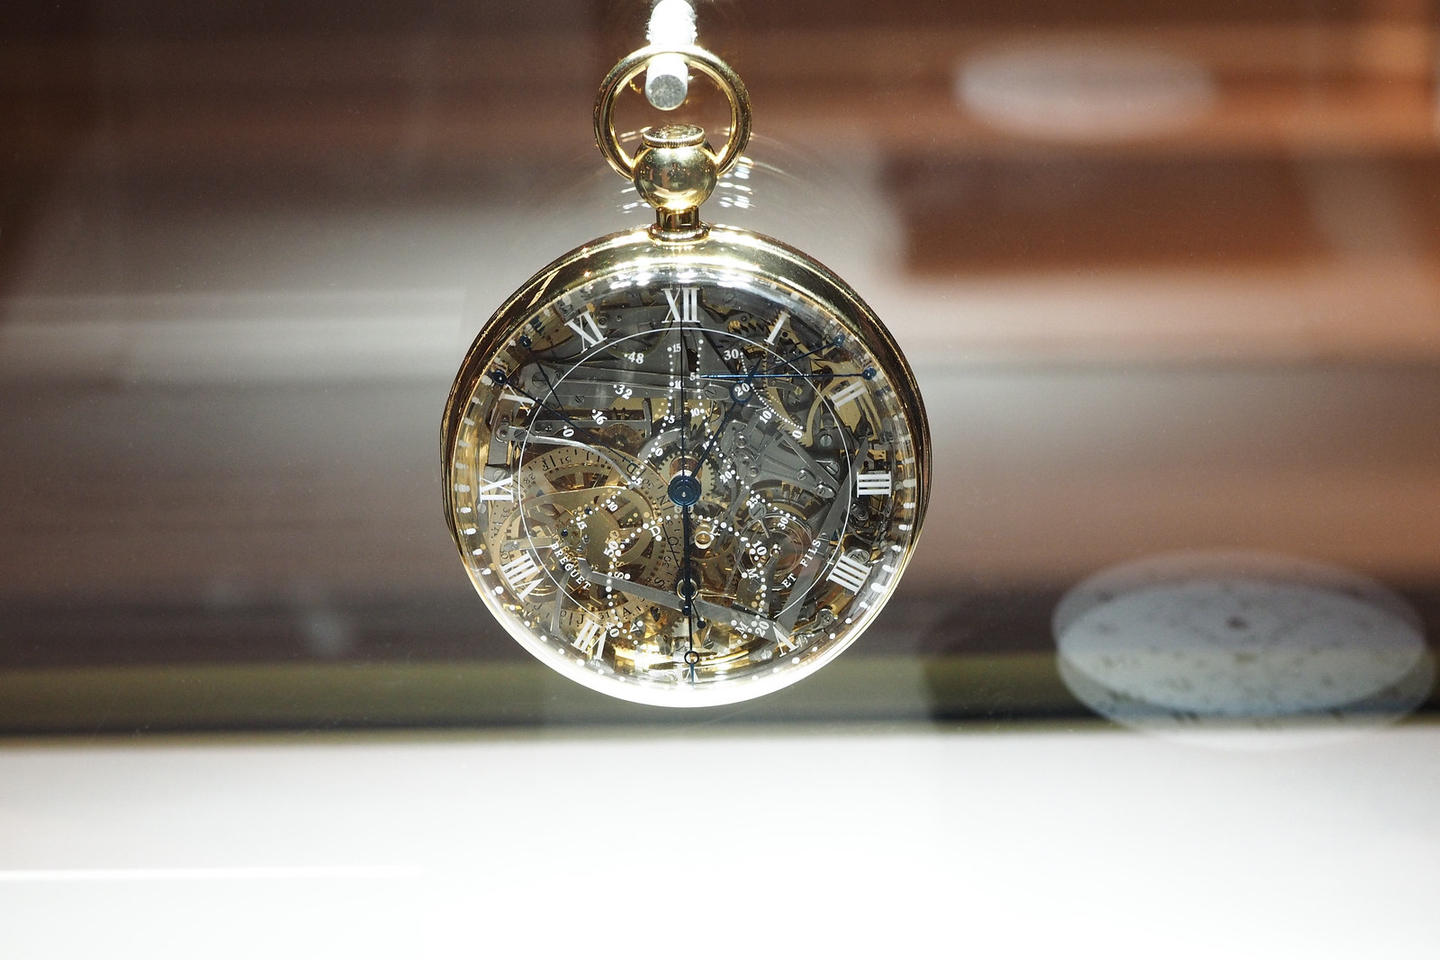 Grand Complication pocket watch No. 1160